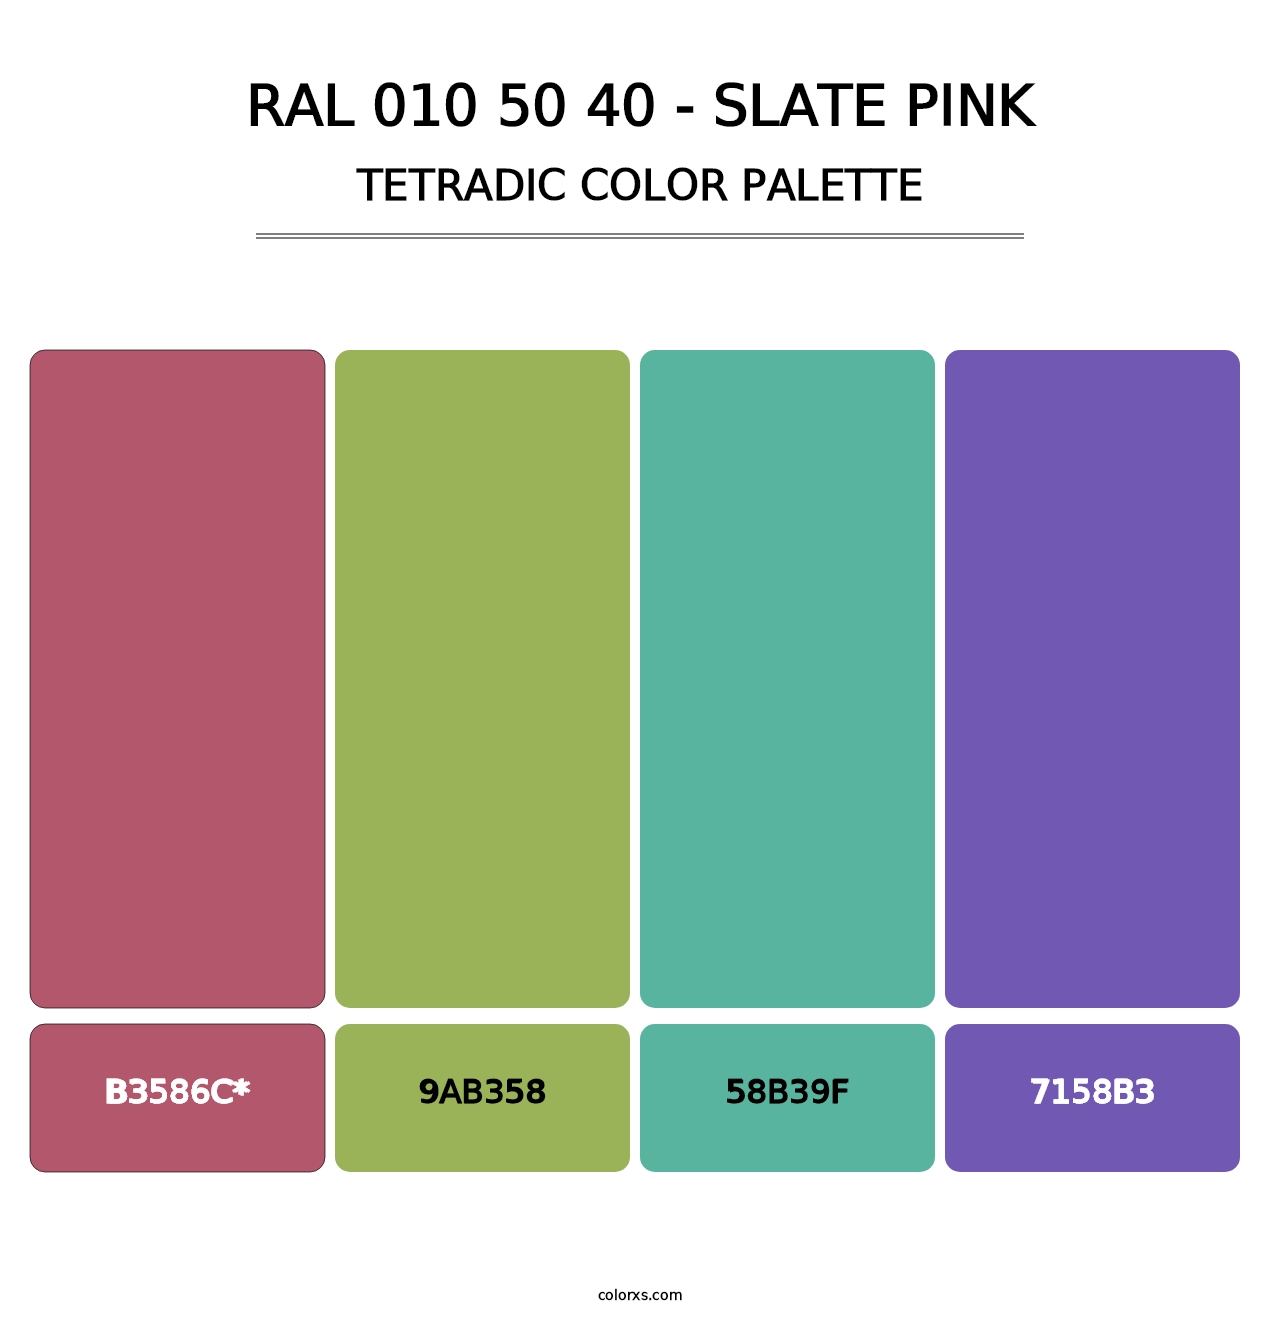 RAL 010 50 40 - Slate Pink - Tetradic Color Palette